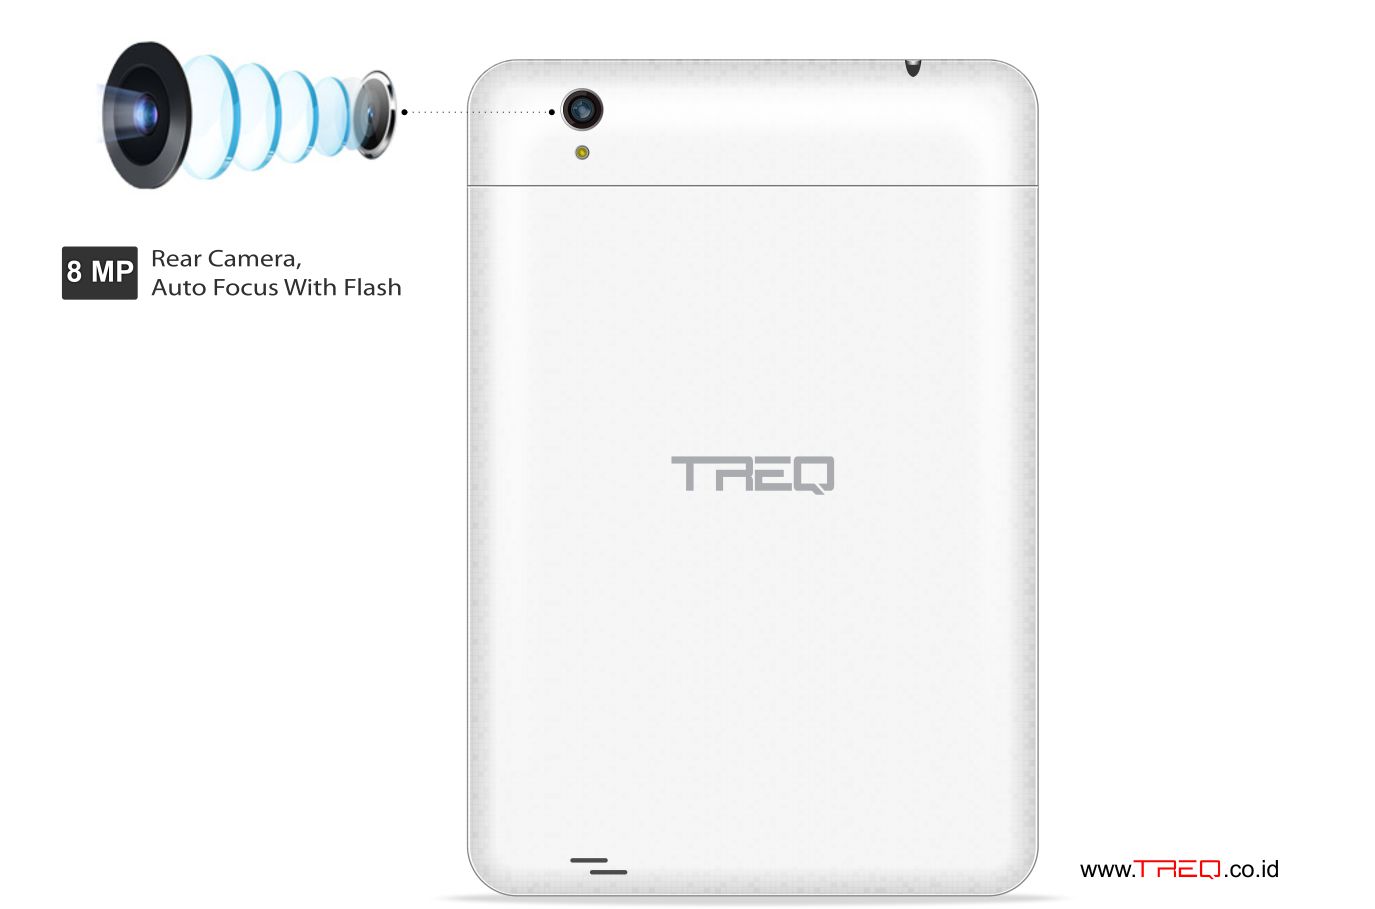 Treq Basic Mini 3G Feature